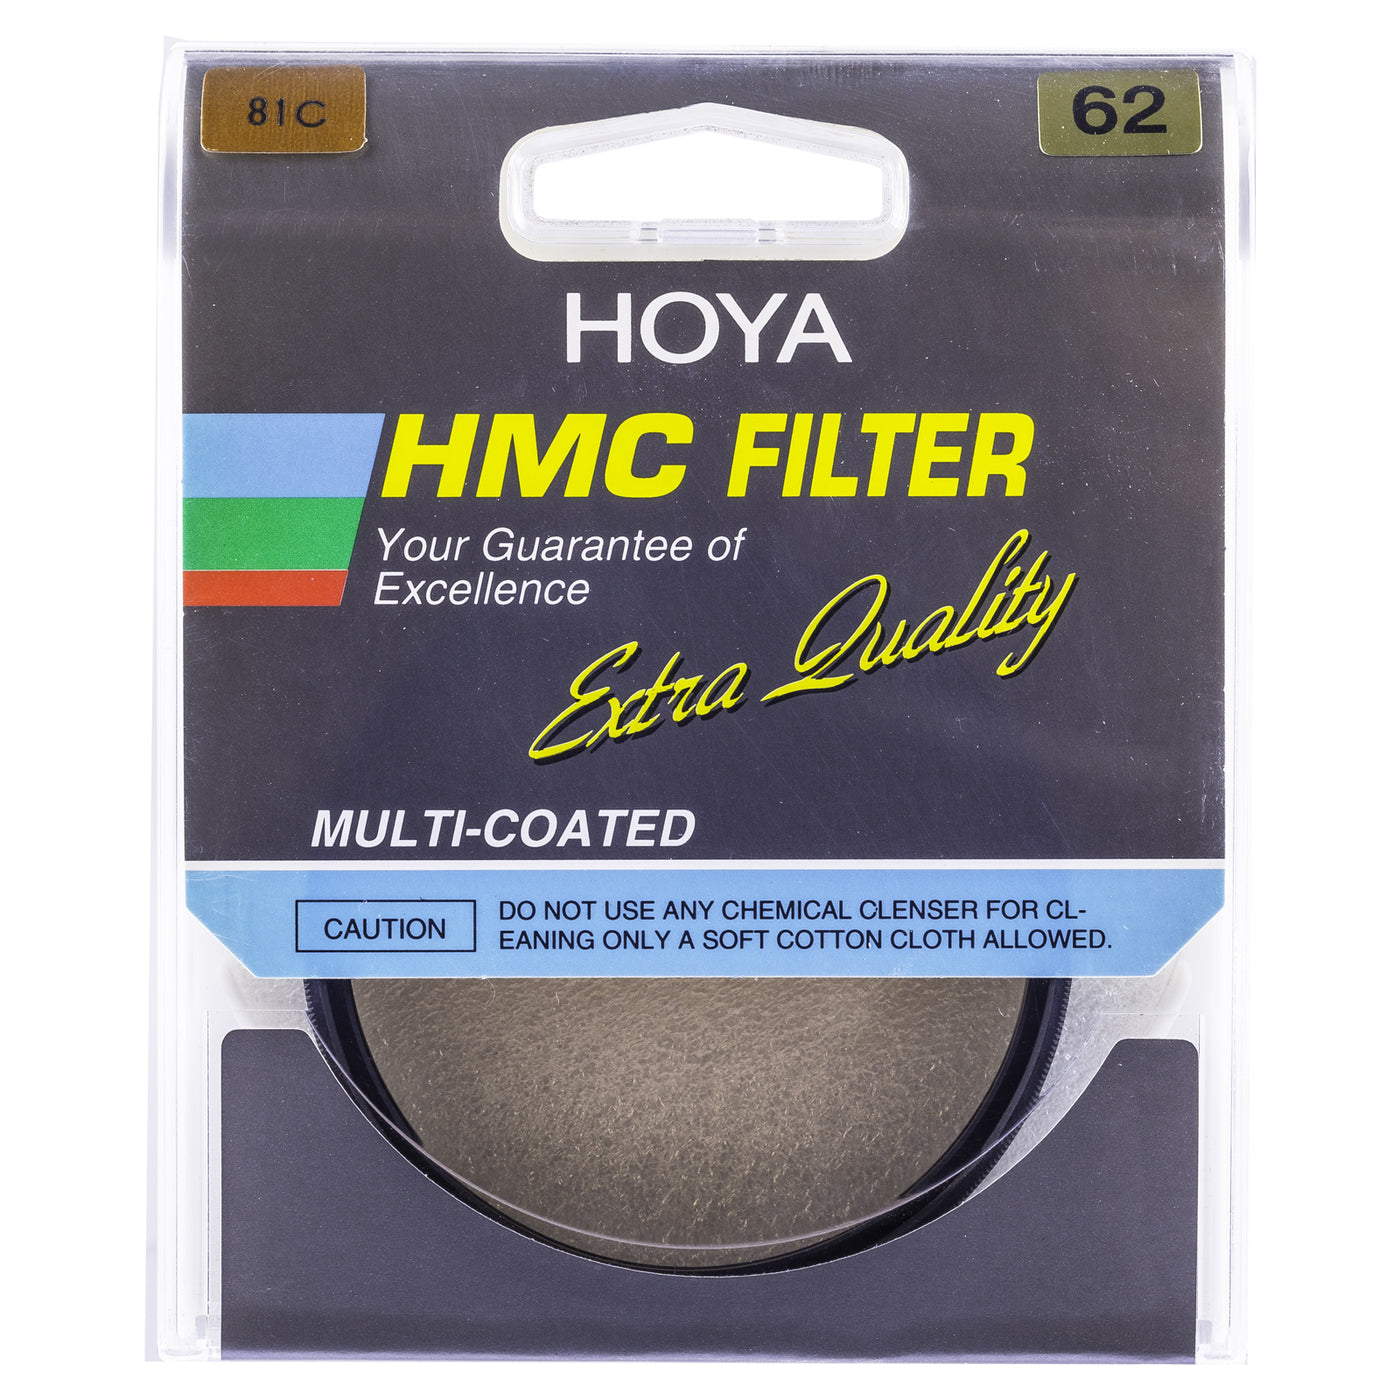 Hoya A 81 C Filter Box